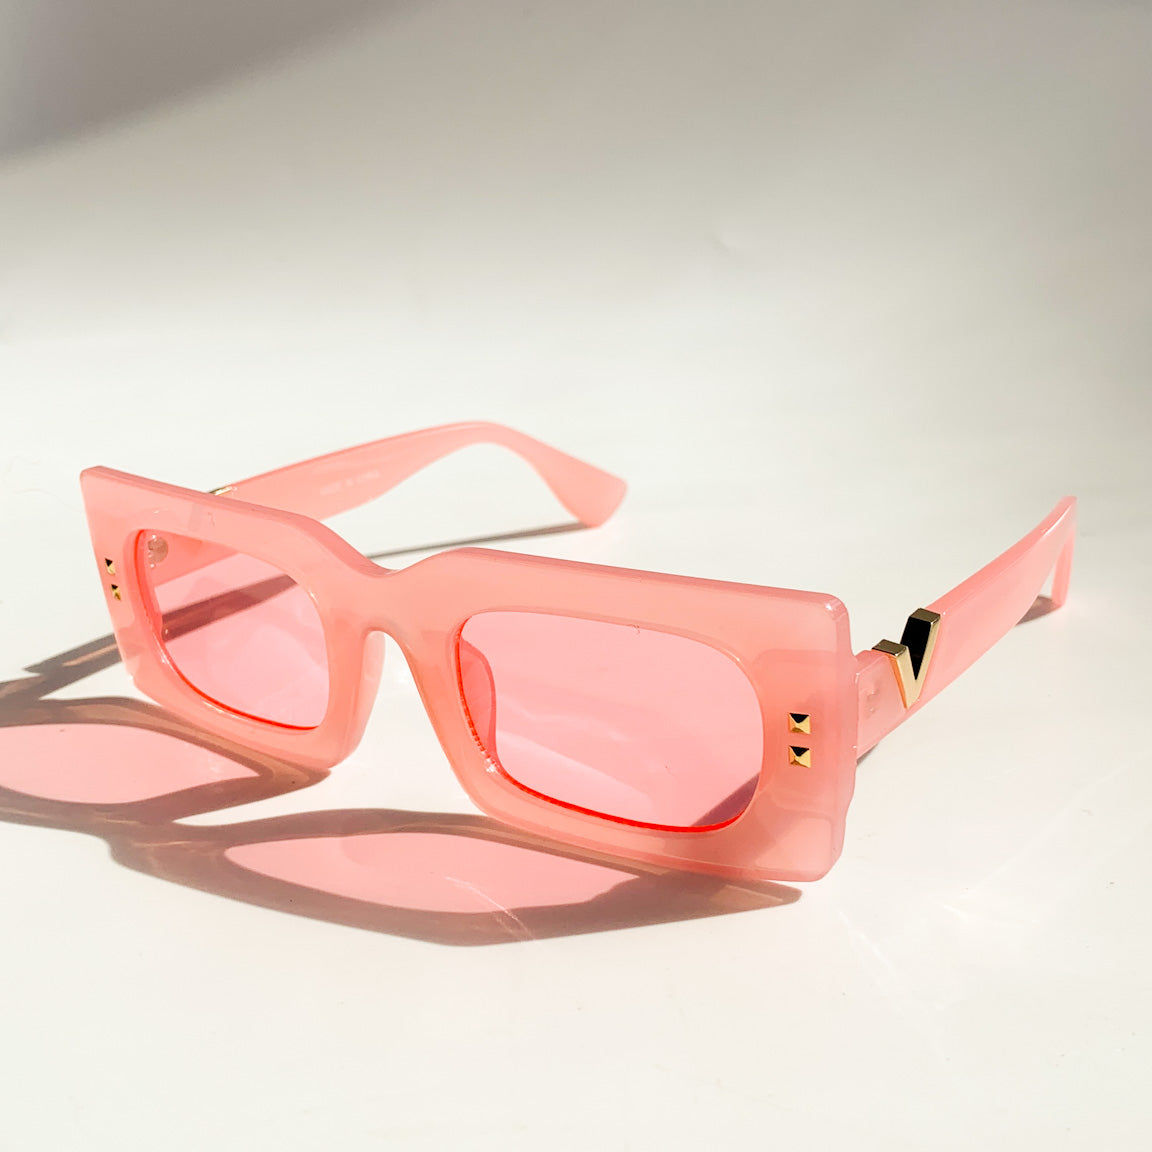 The Valerie Sunglasses